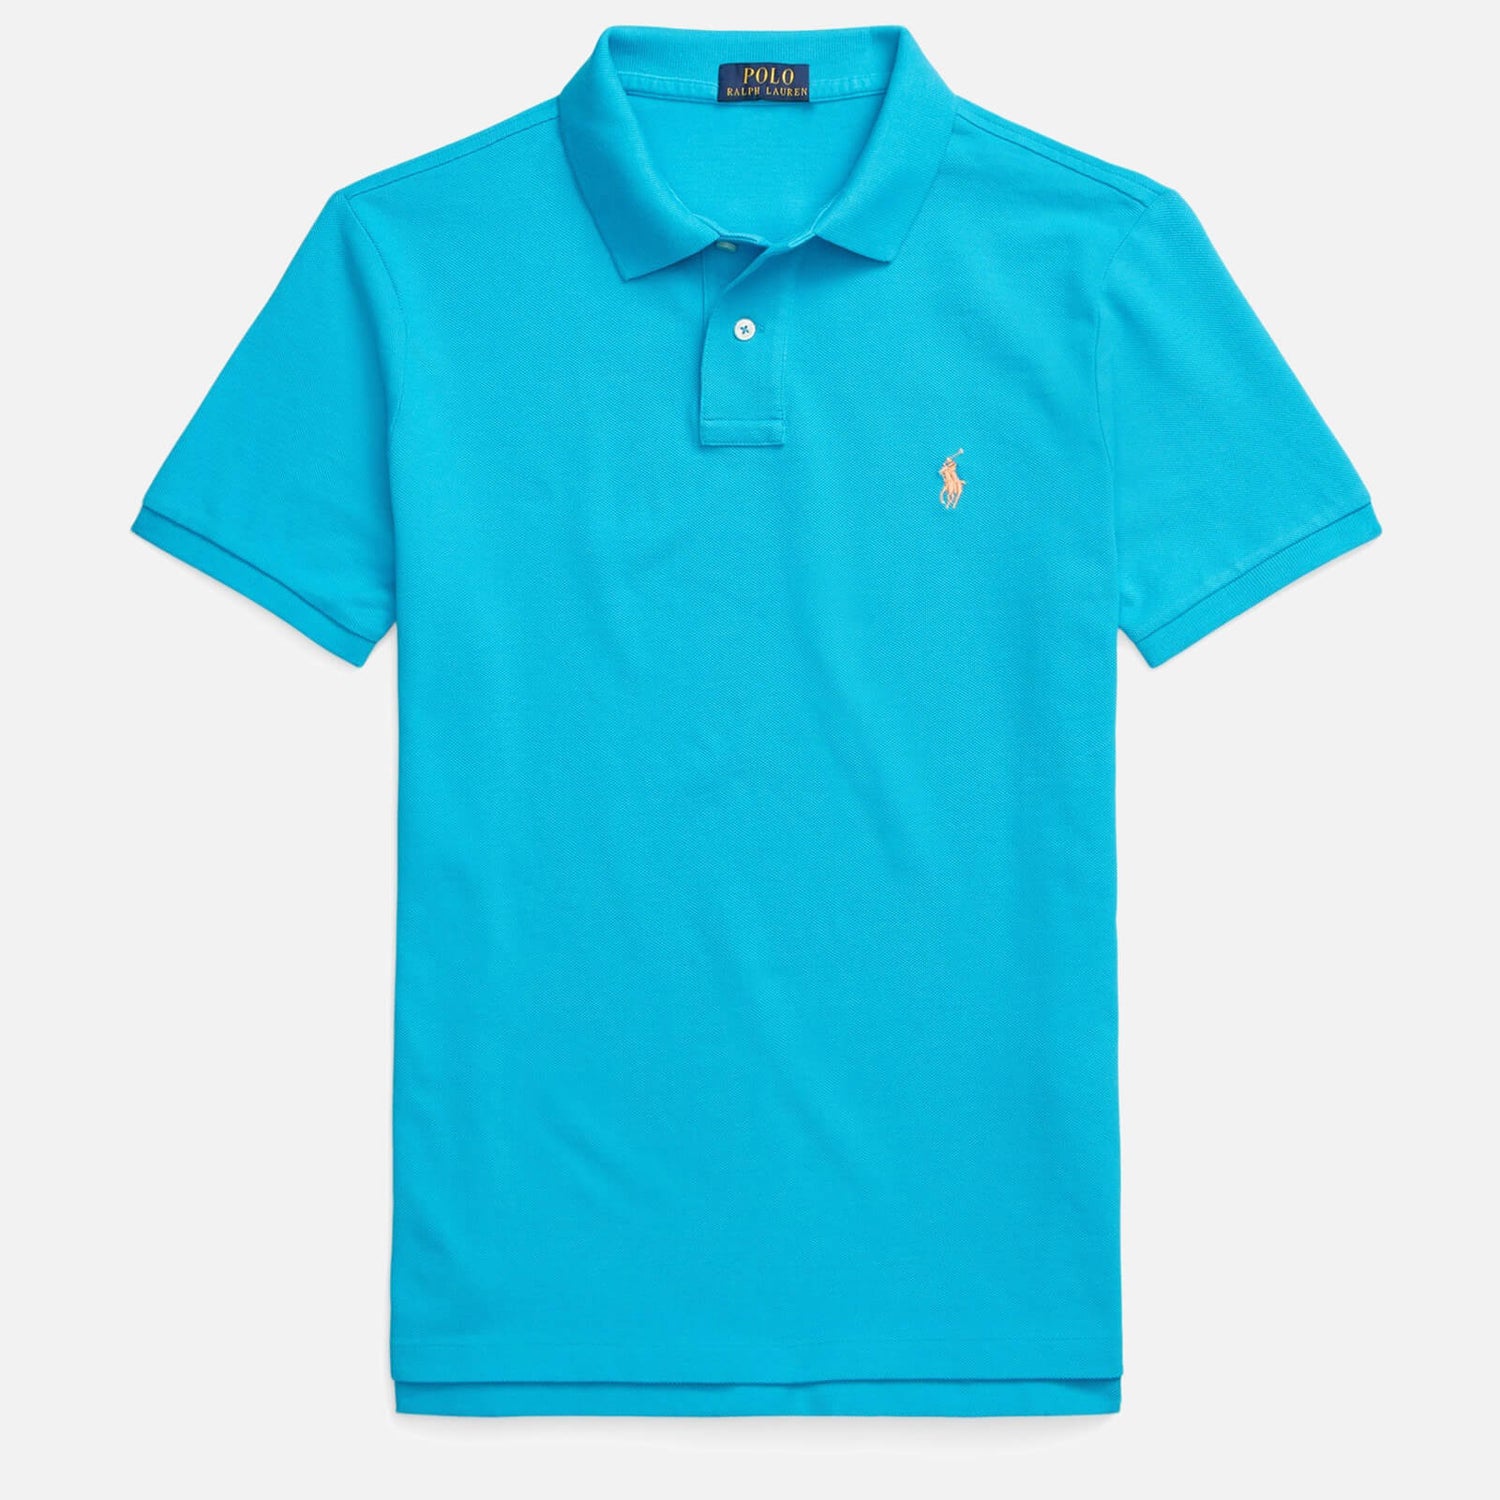 Polo Ralph Lauren Men's Slim Fit Mesh Polo Shirt - Cove Blue